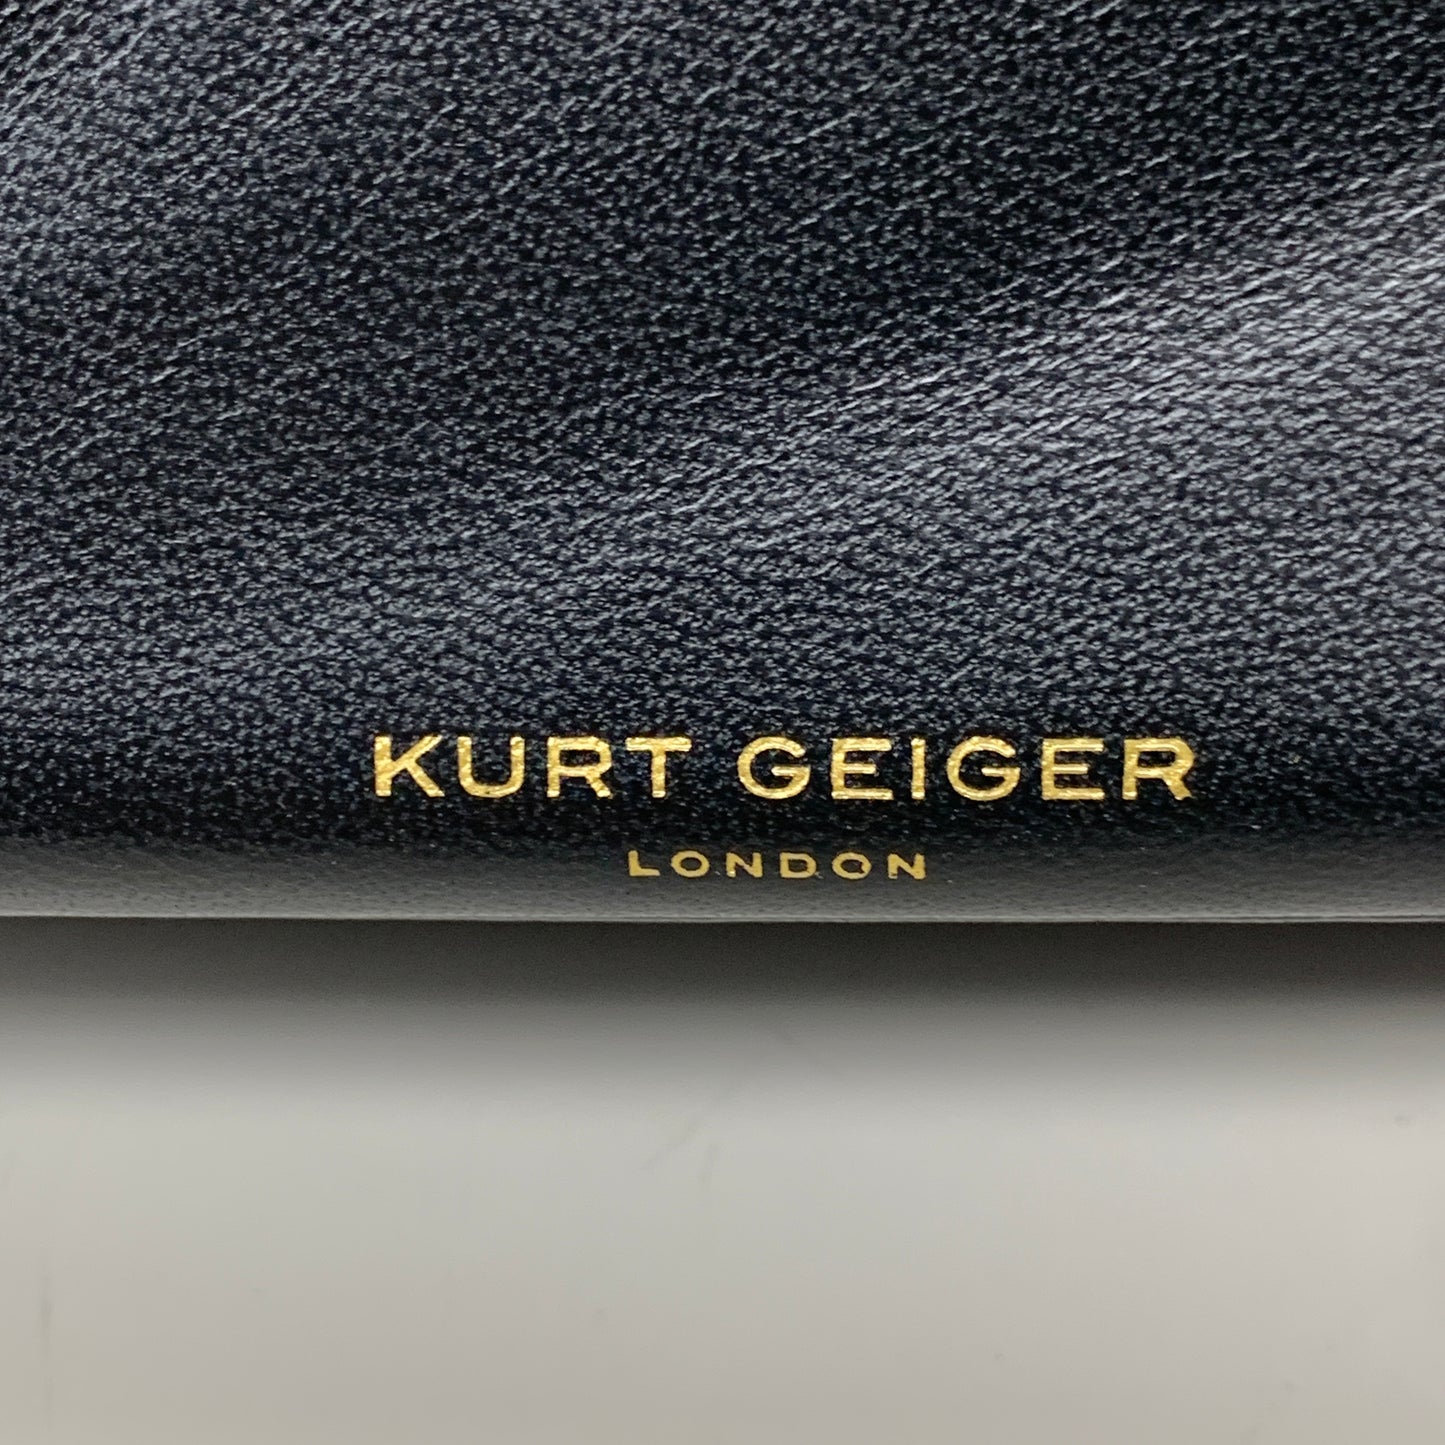 KURT GEIGER Kensington Leather X Bag 10.5" x 7" Black 1470400109 New